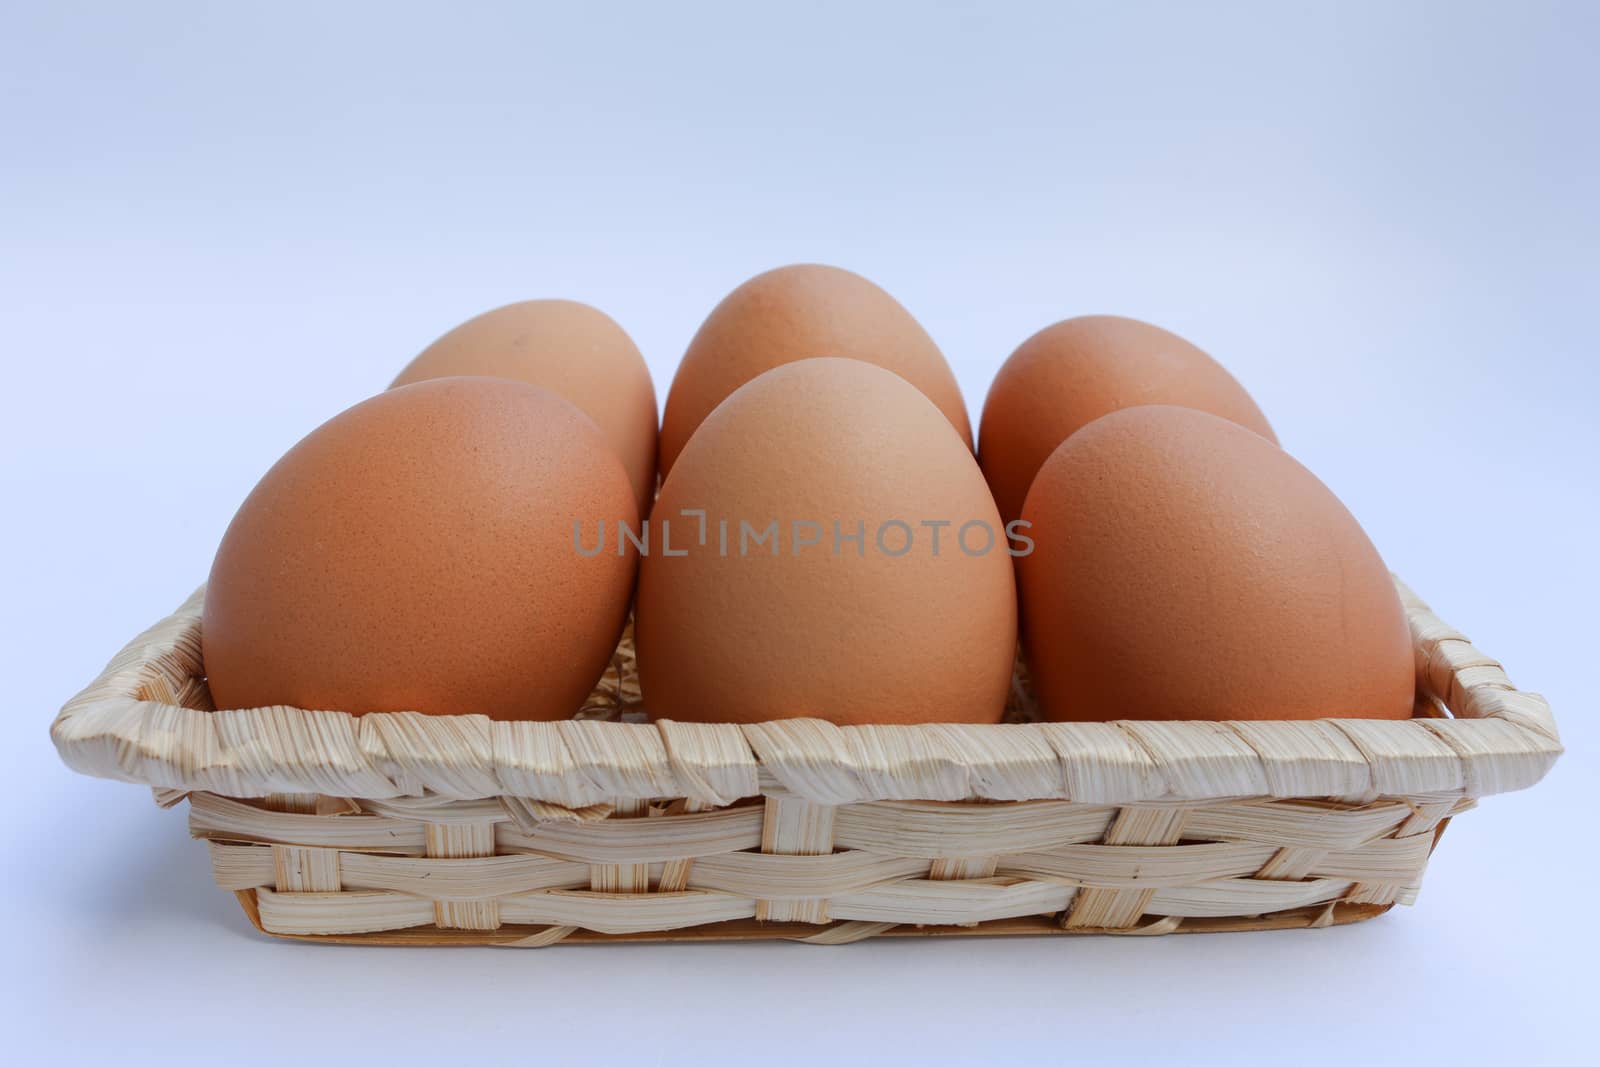 egg in basket wicker on white background by N_u_T